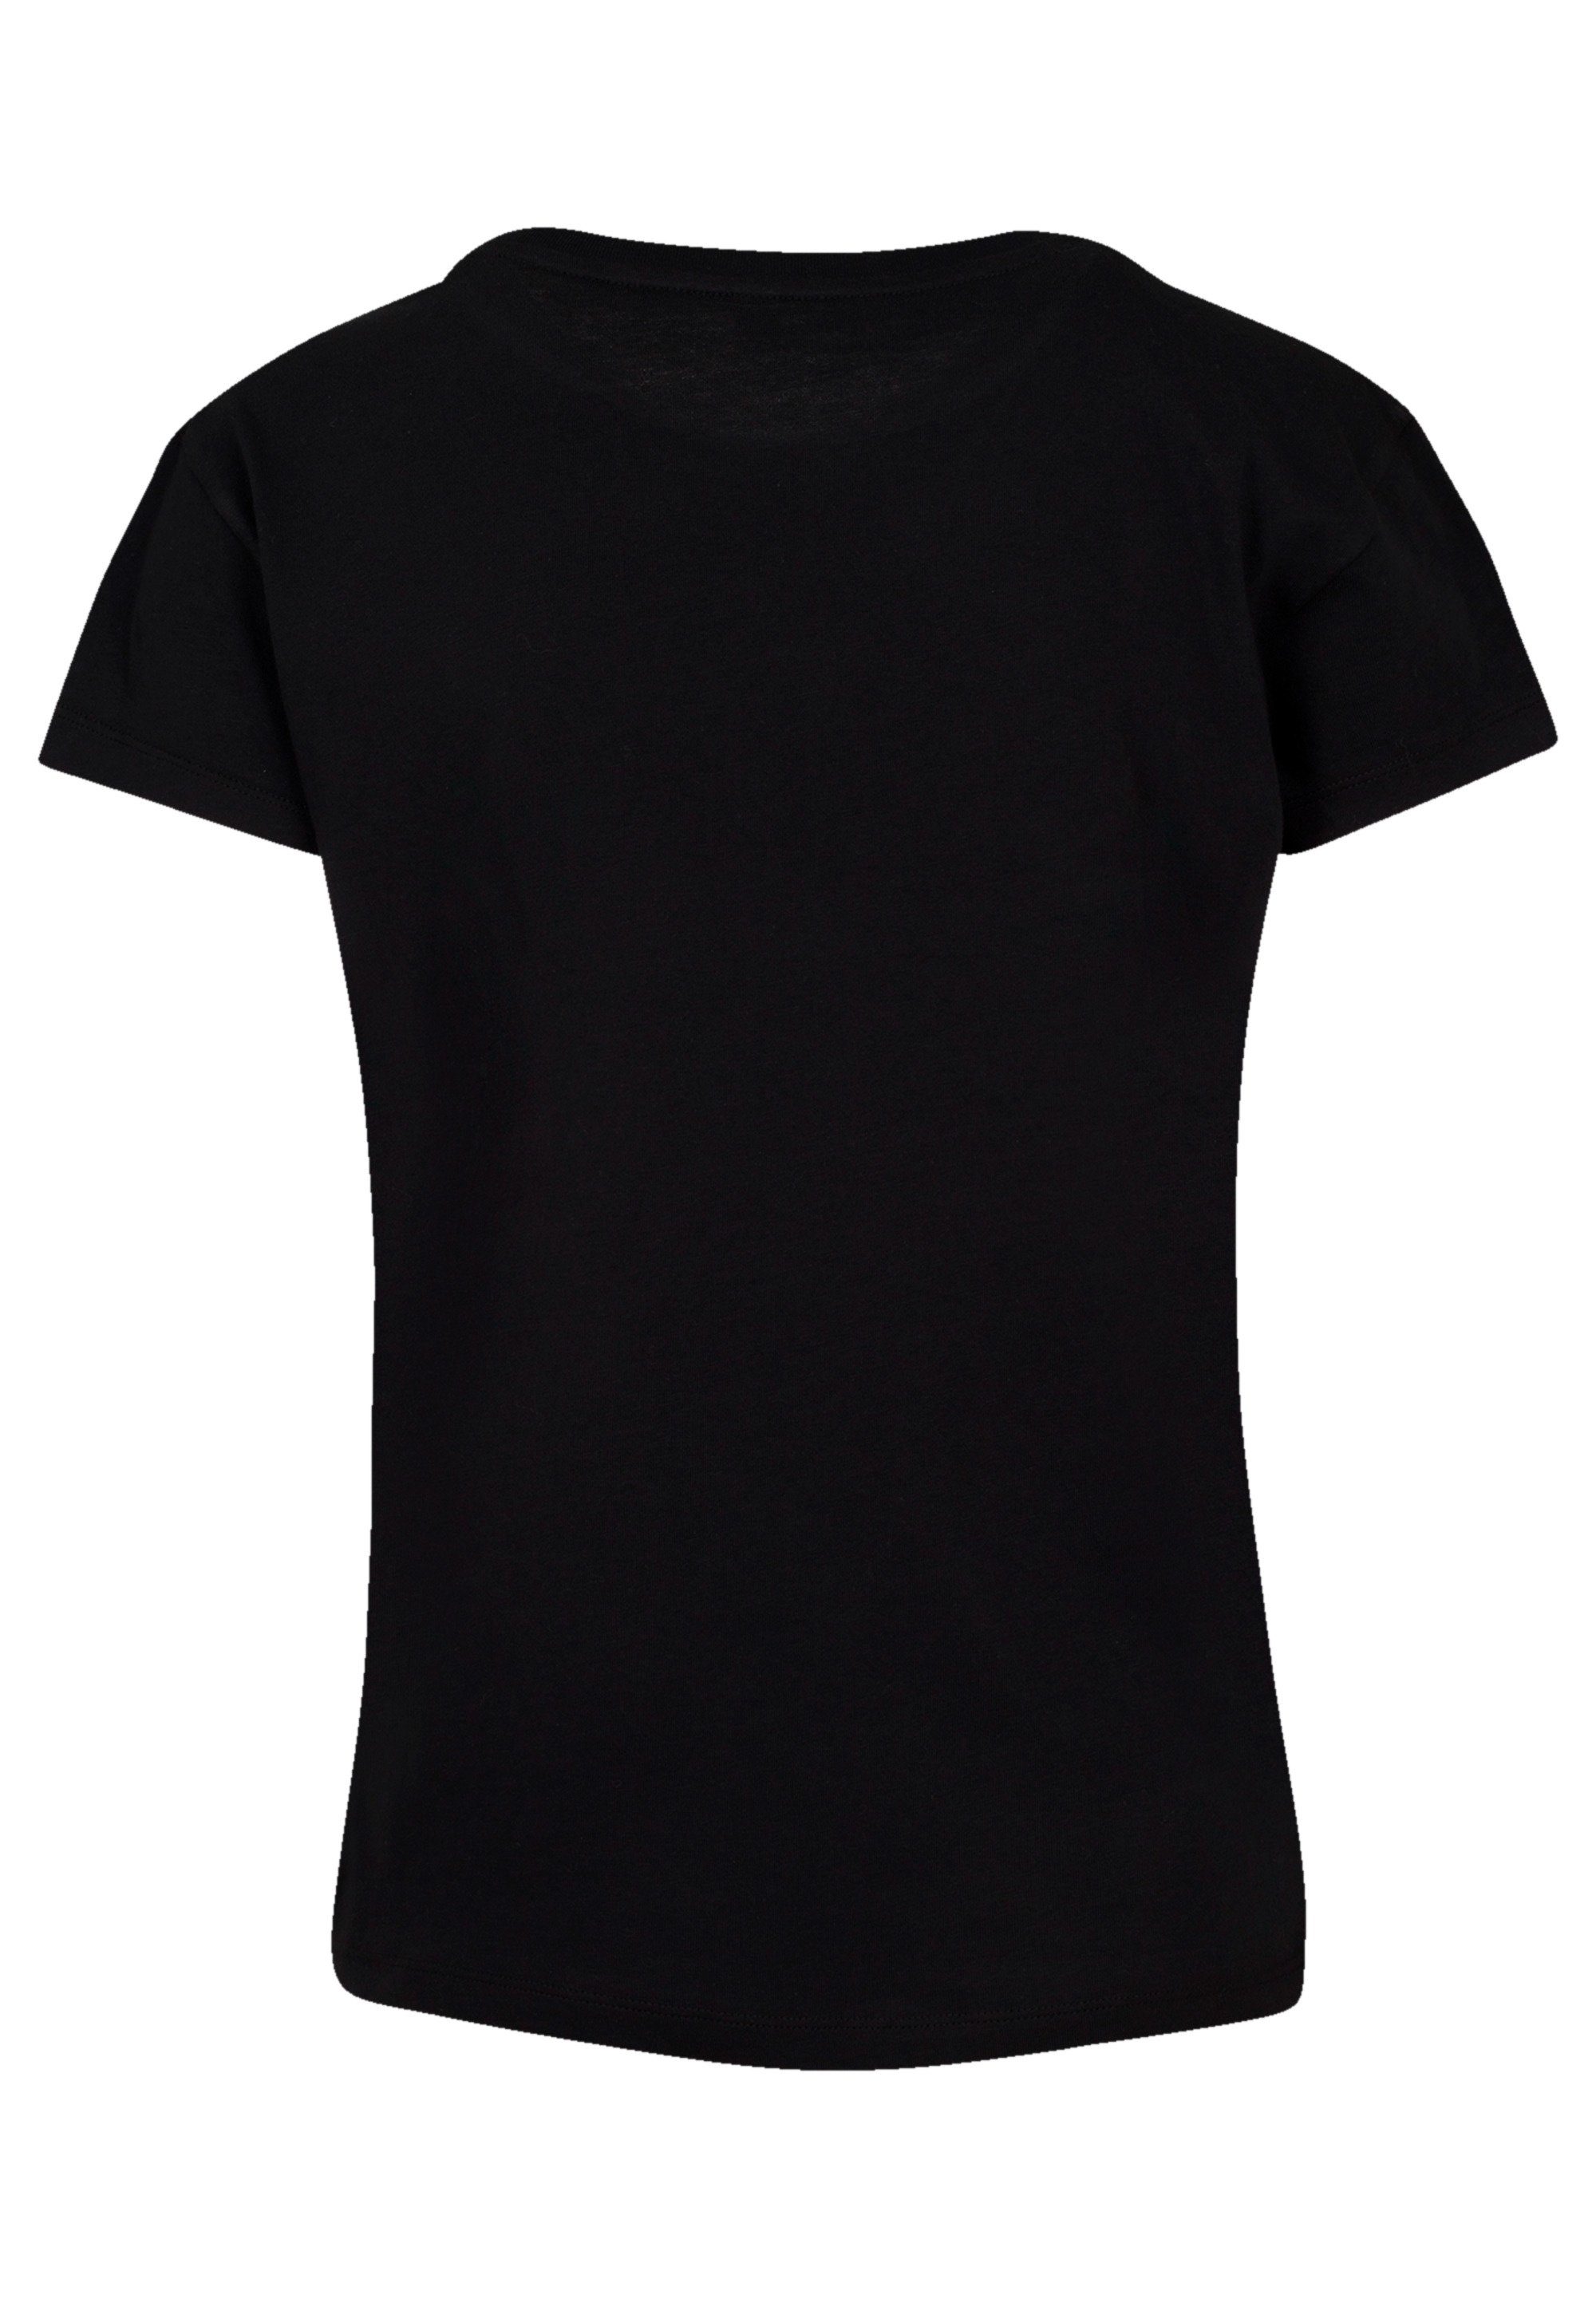 F4NT4STIC T-Shirt Disney Nightmare Before Christmas Jack Face Premium  Qualität, Perfekte Passform und hochwertige Verarbeitung | T-Shirts